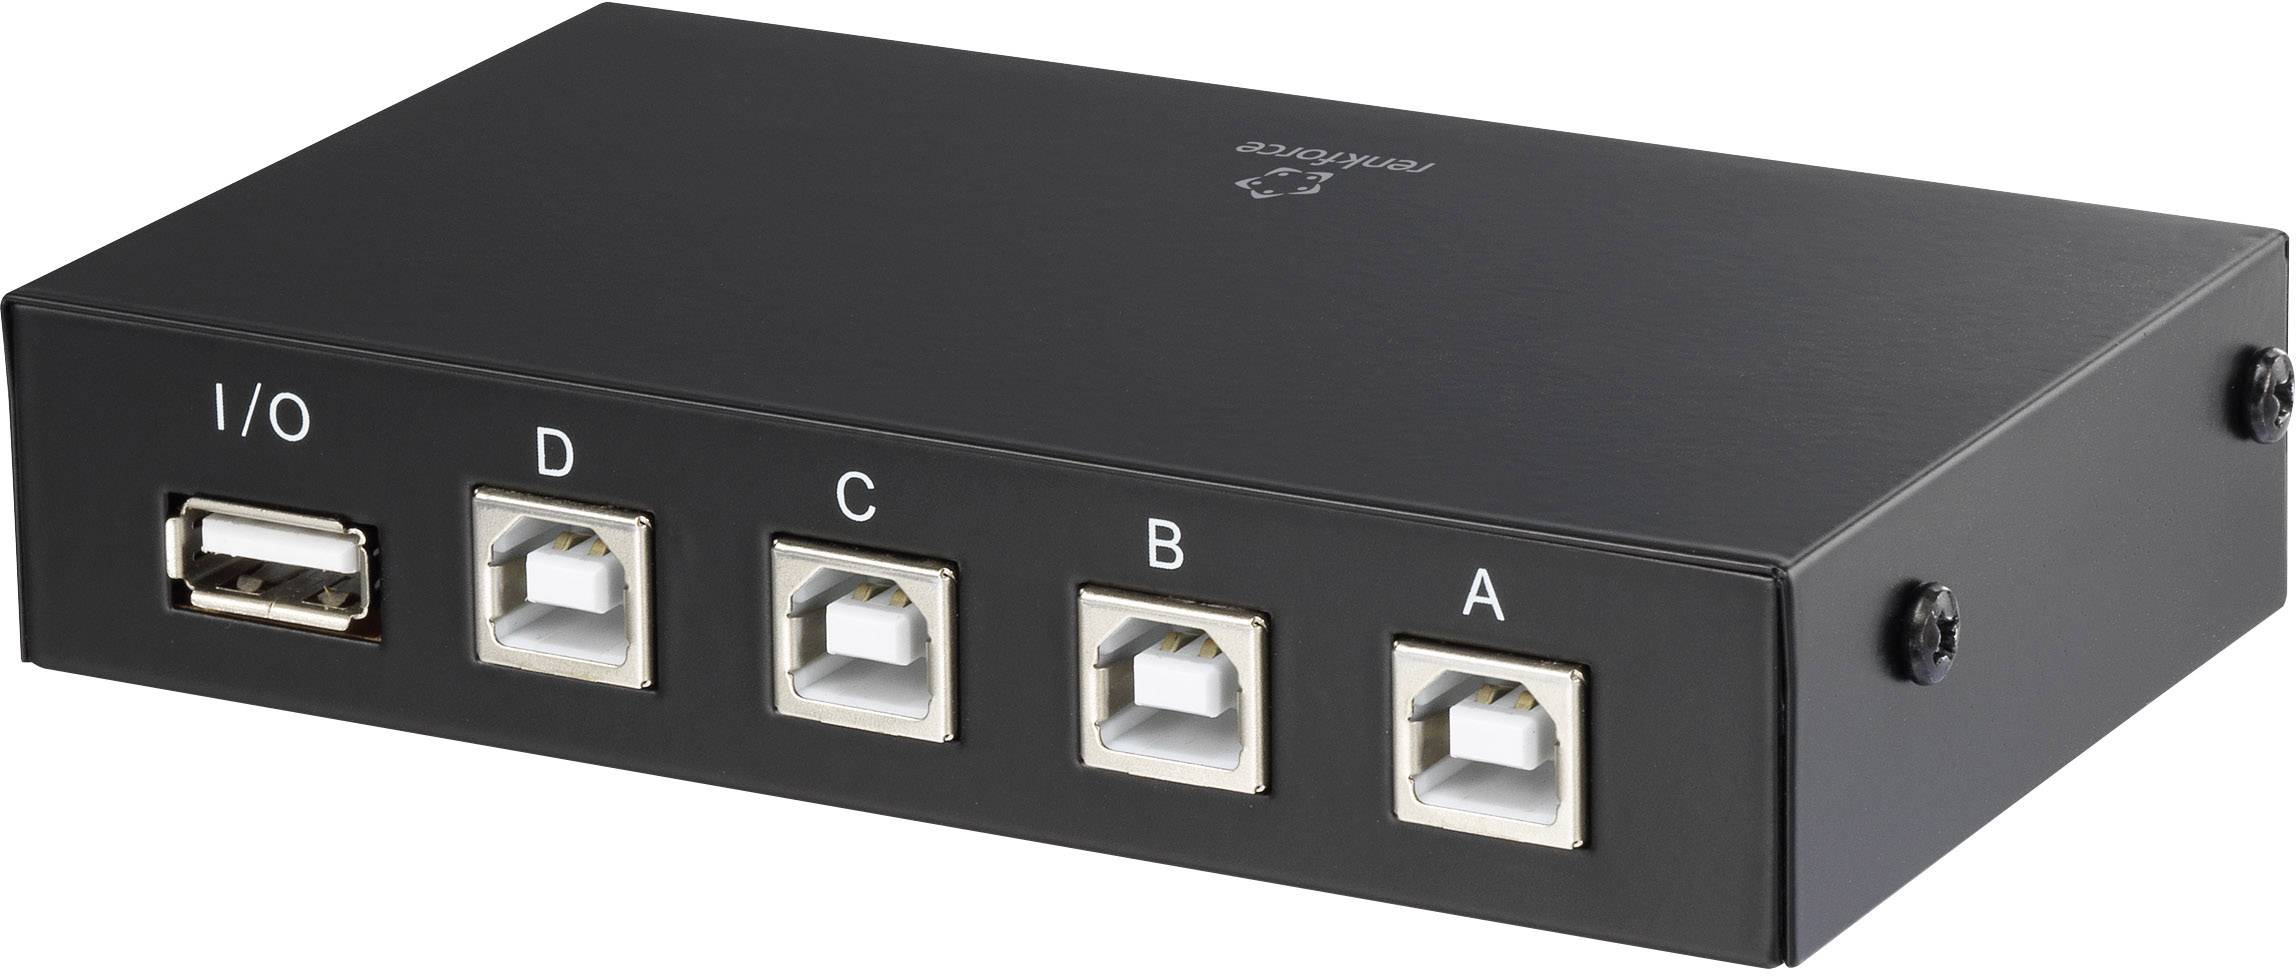 Renkforce 4 ports USB 2.0 changeover switch Black Conrad.com